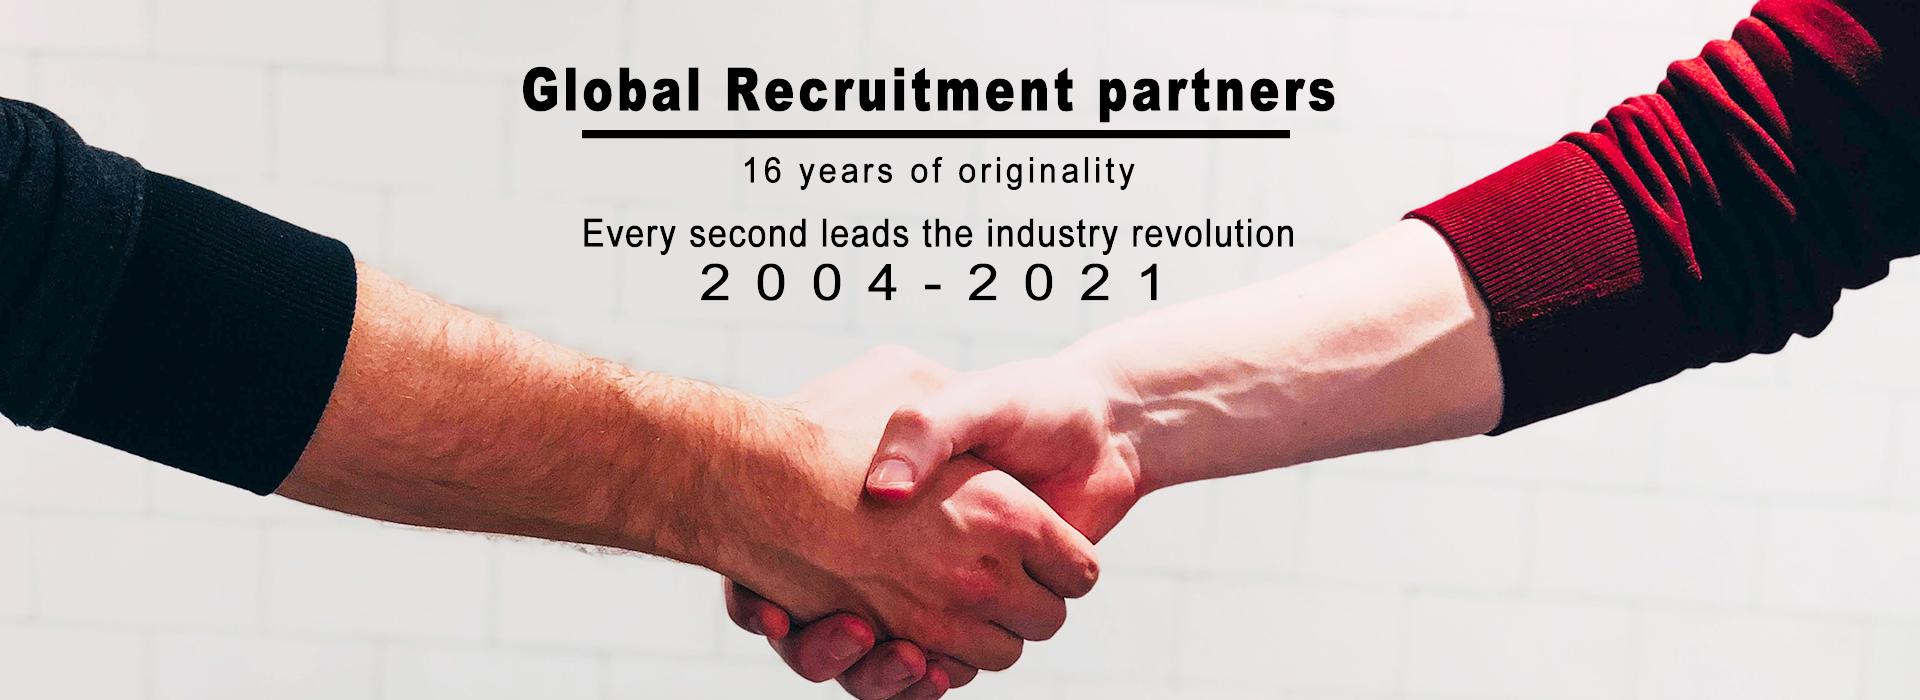 Global recruitment partners!